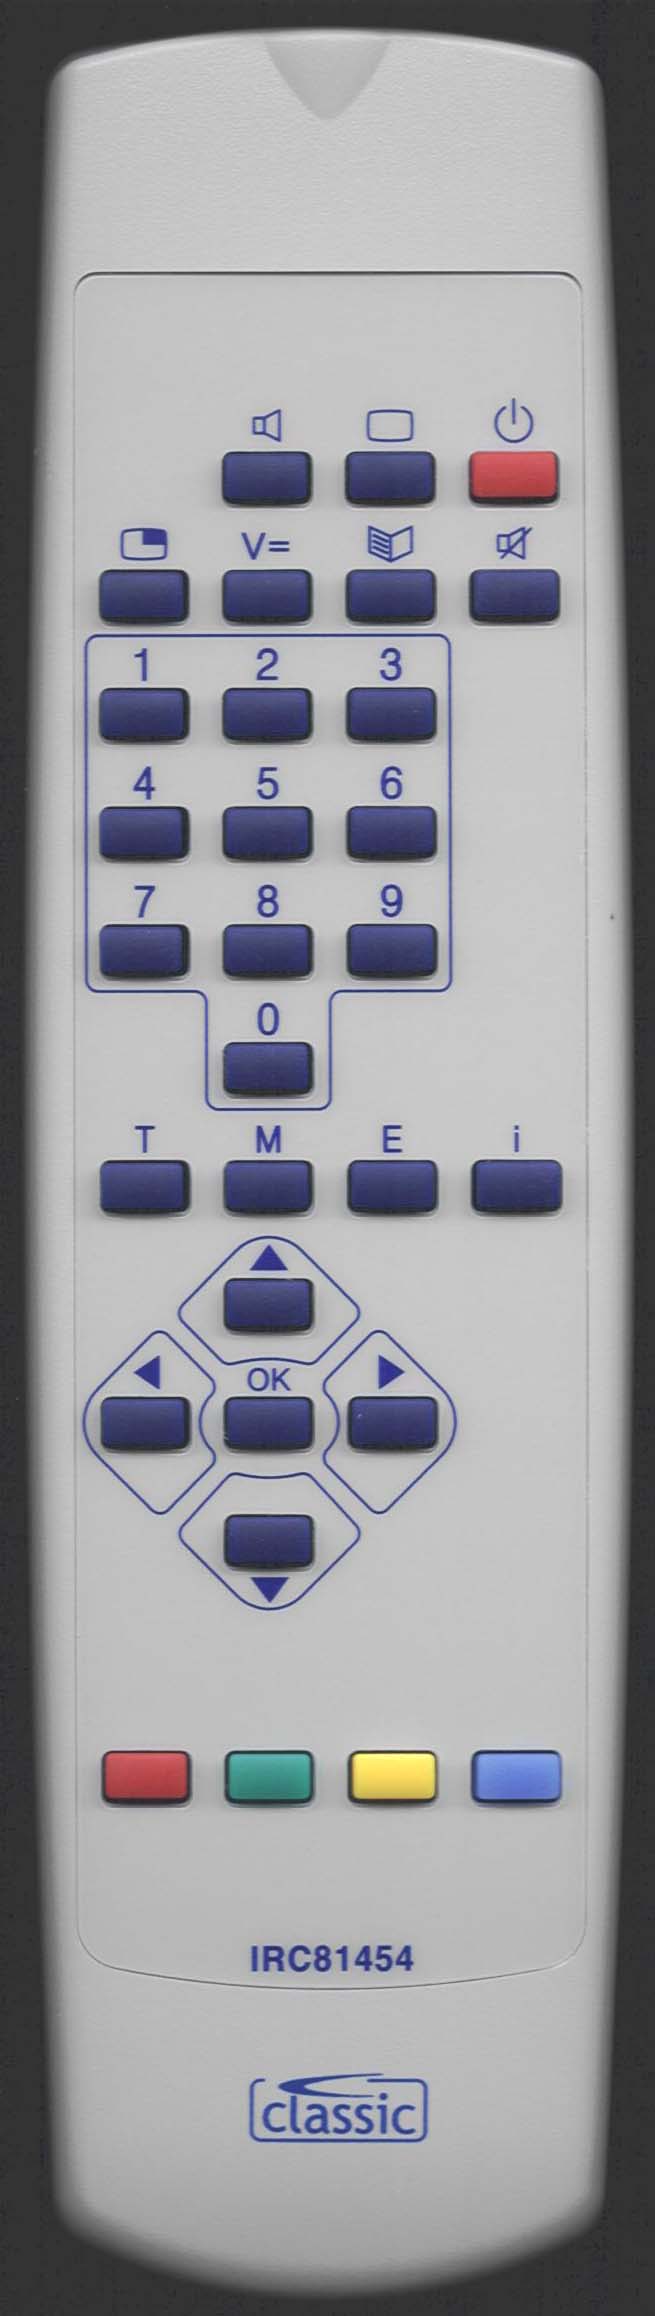 Loewe ACONDA 9272ZP Remote Control